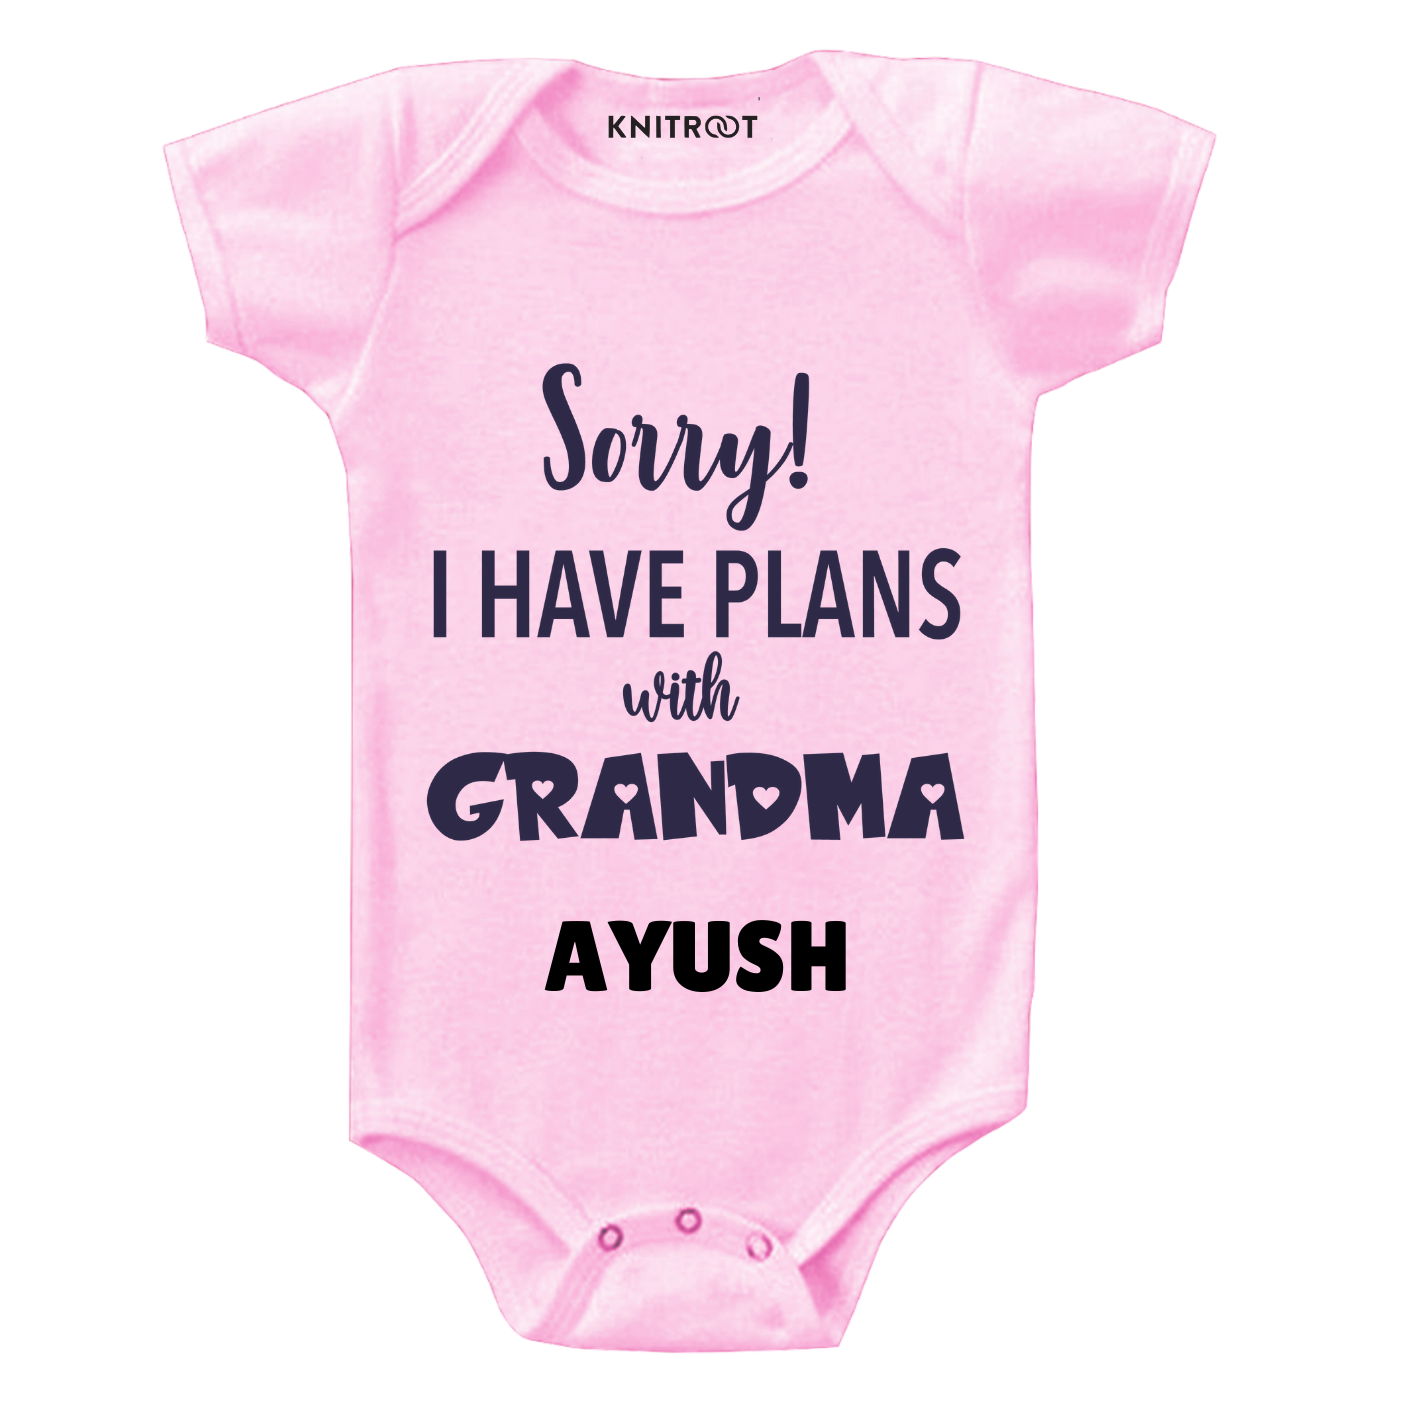 Plans with grandma - Onesie